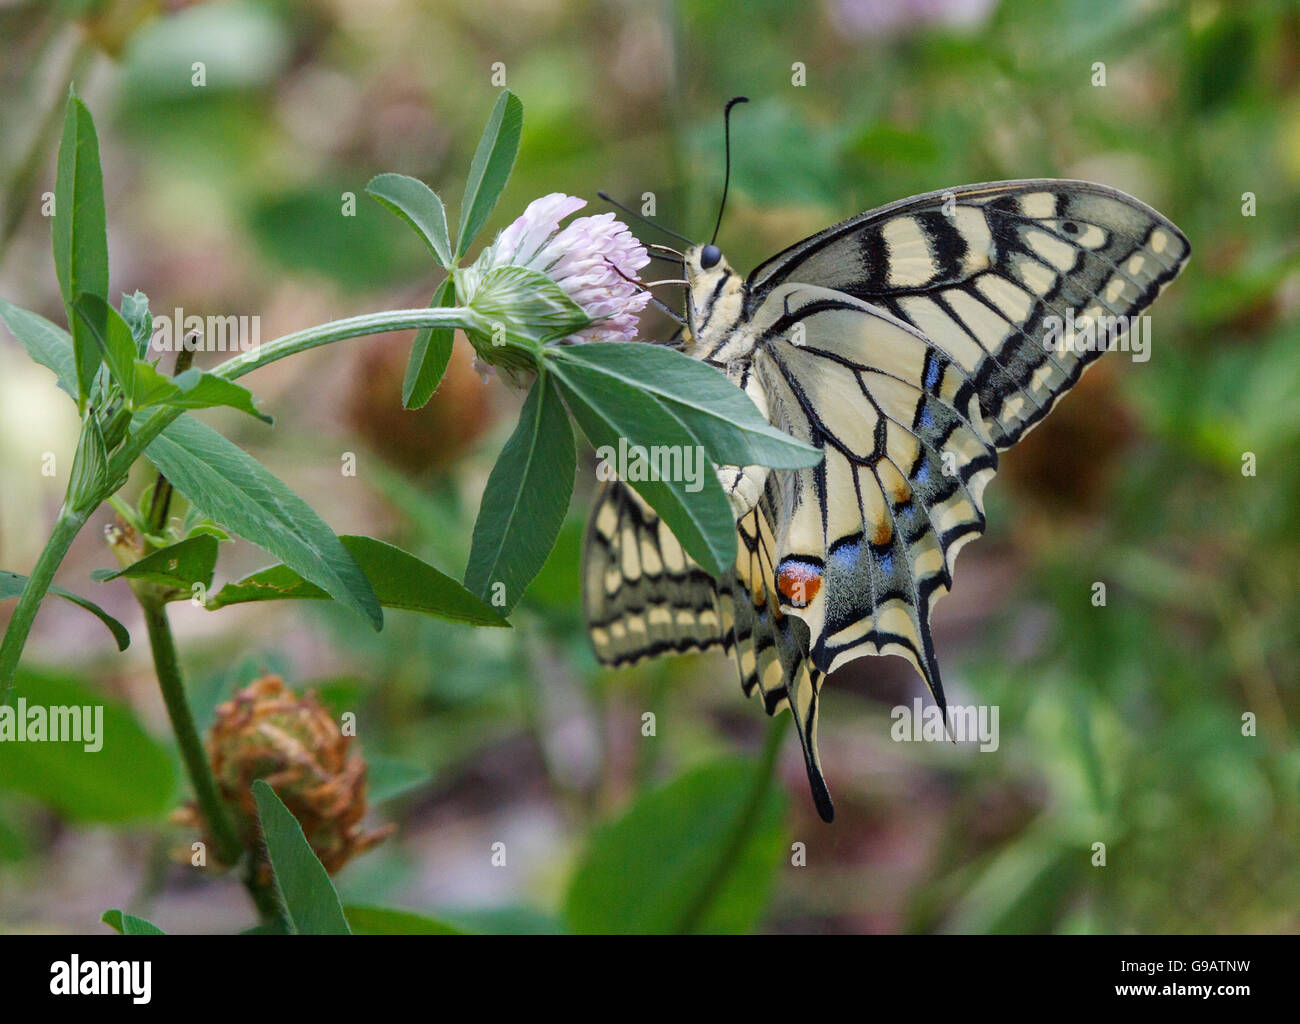 Machaon butterfly on wild flower Stock Photo